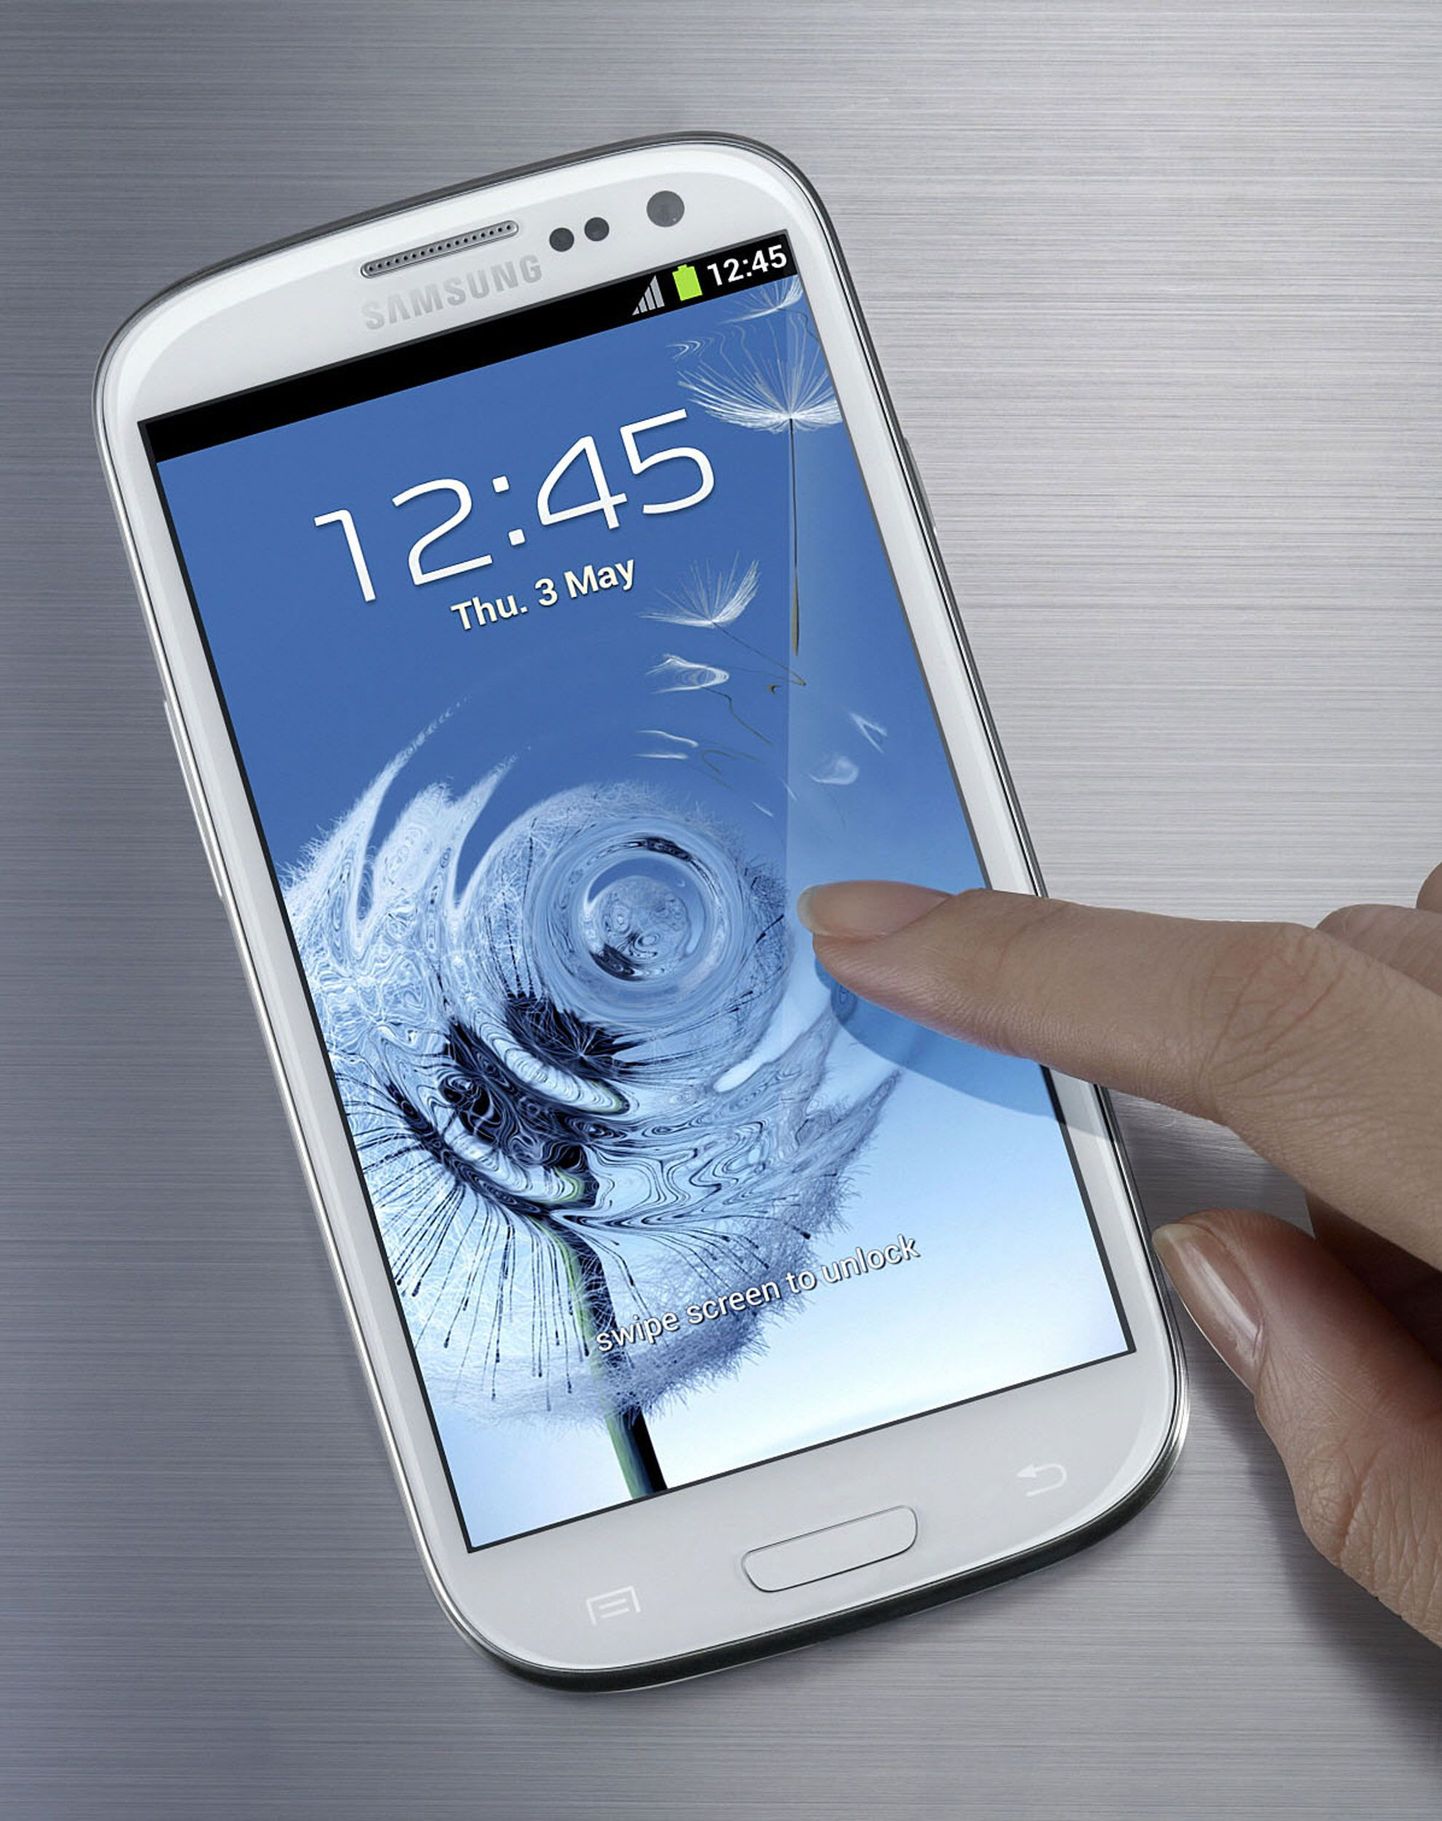 Samsung Galaxy S III nutitelefon.